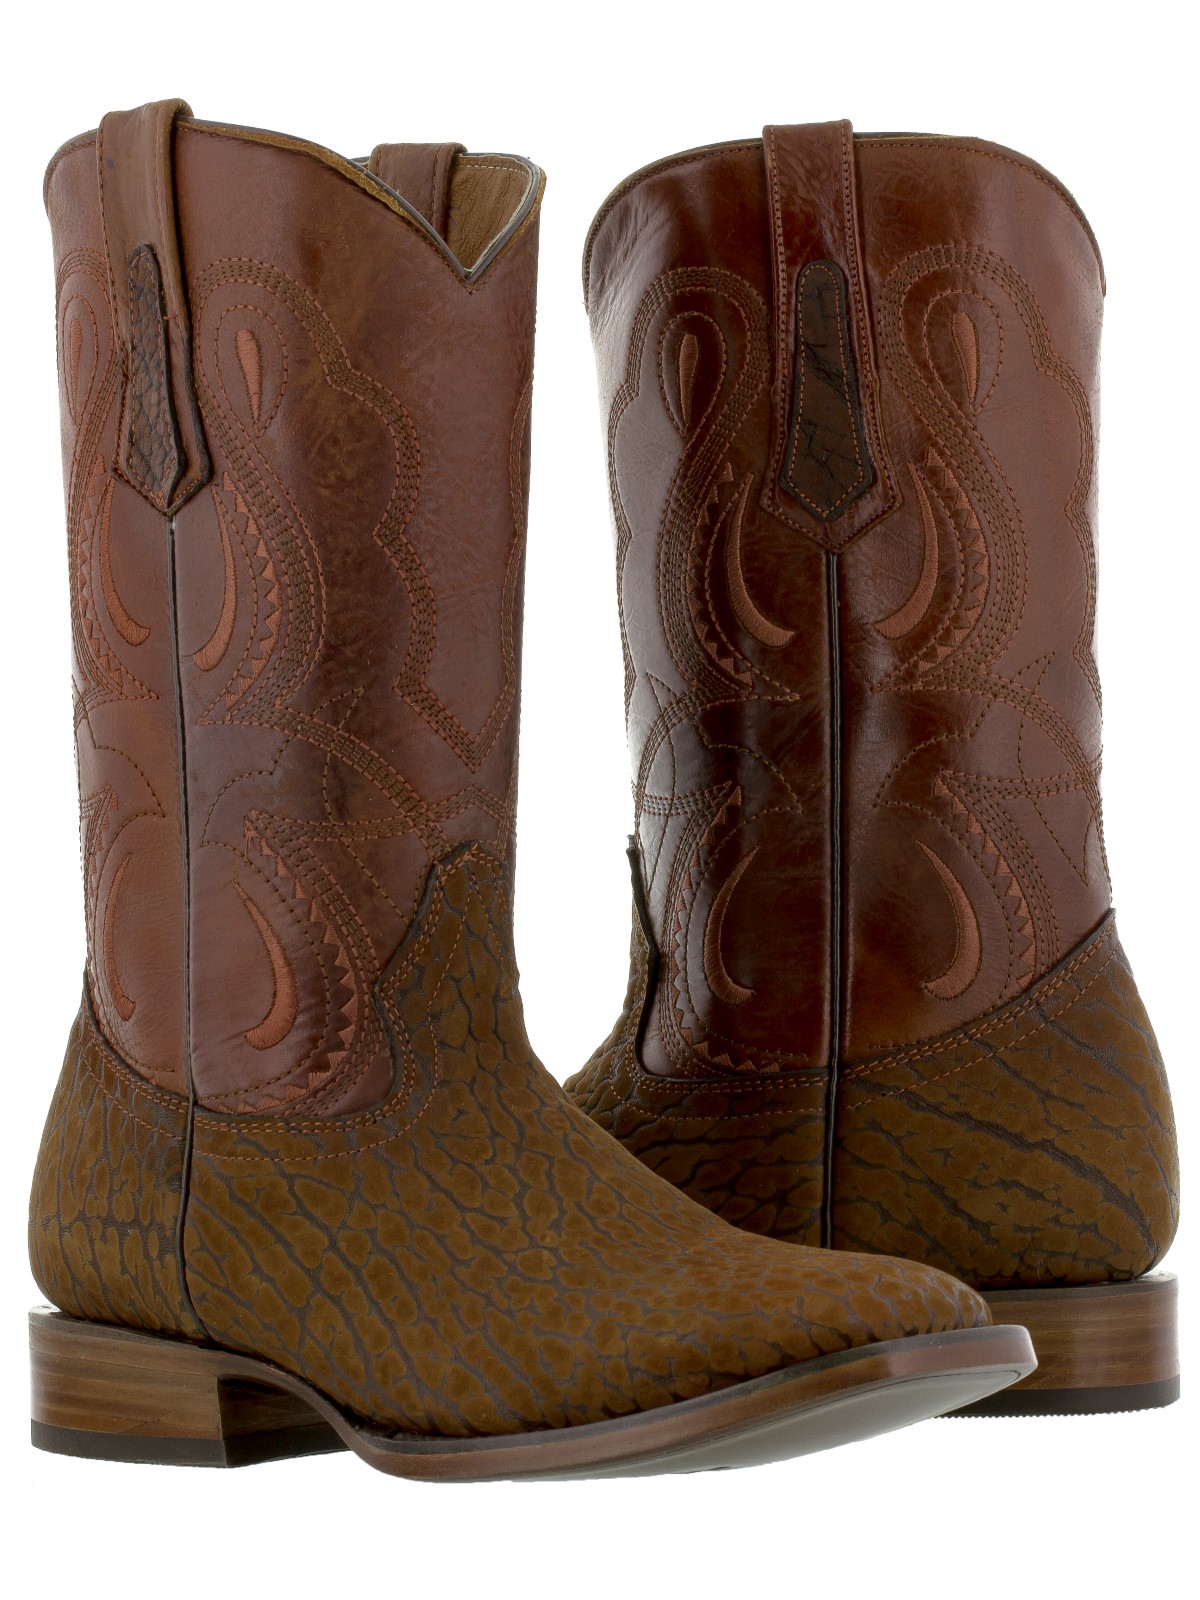 mens rust cognac brown buffalo bull skin leather boots cowboy western square toe | eBay